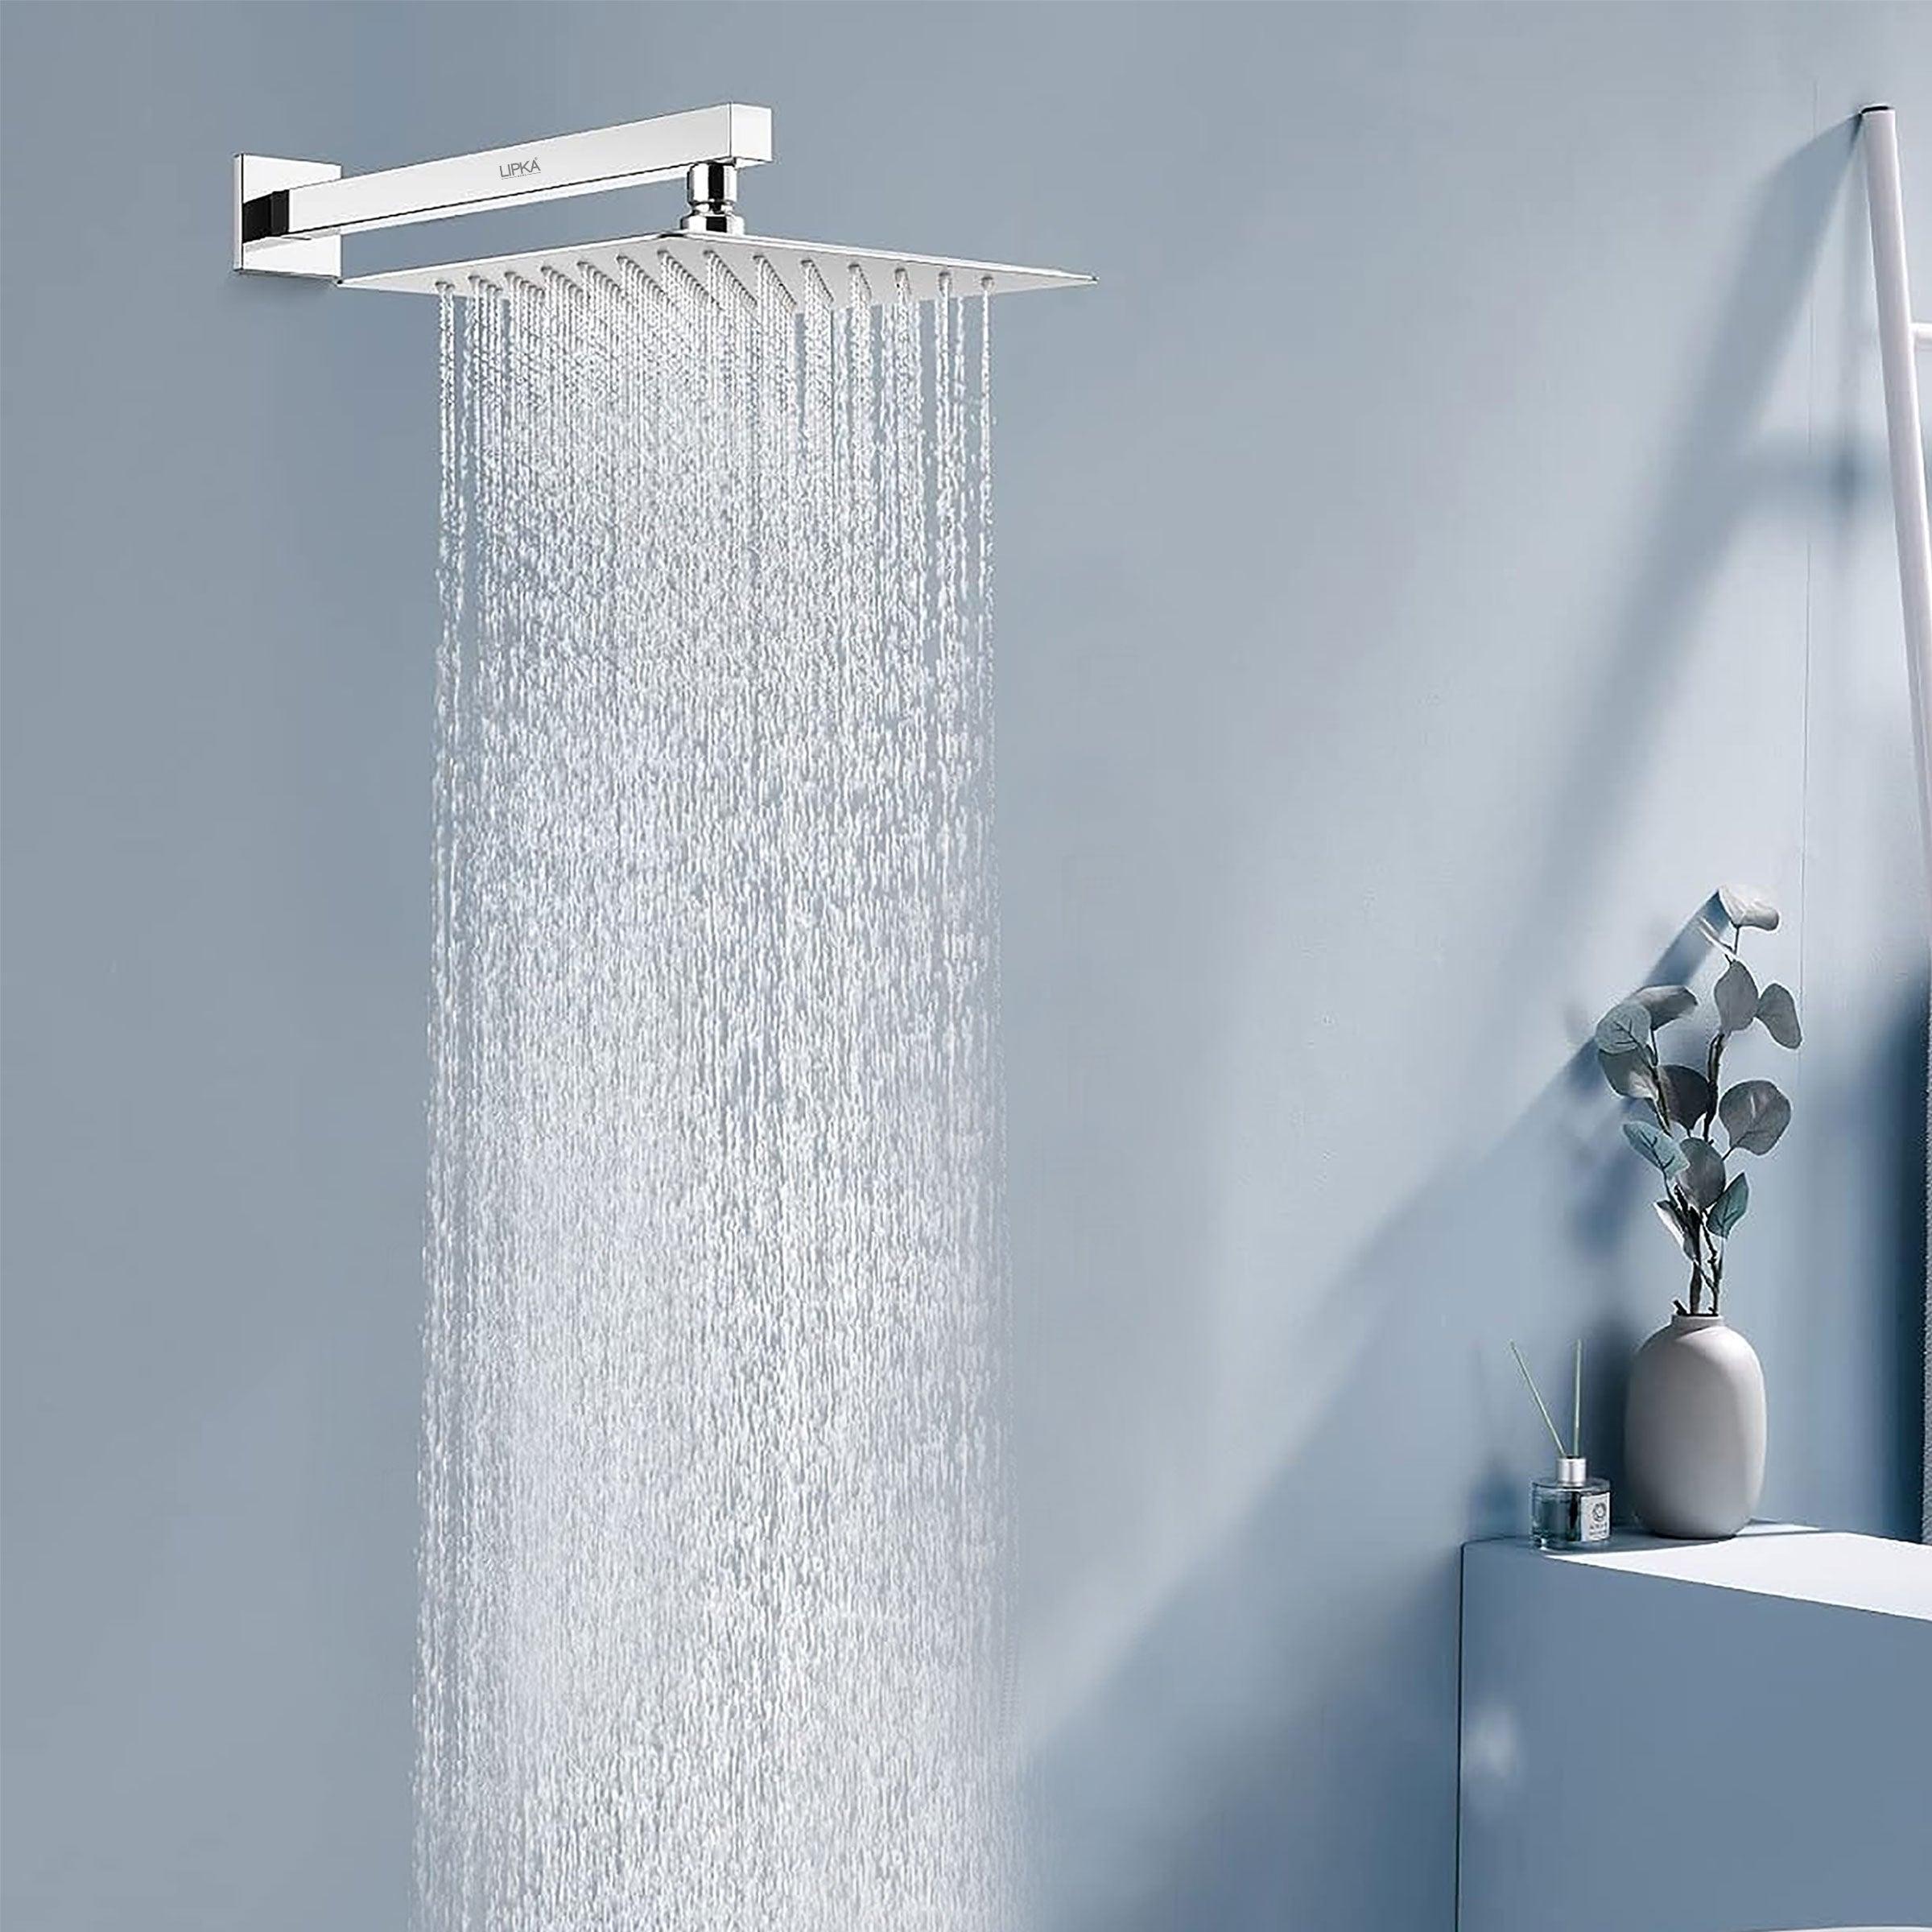 Ultra Thin 304-Grade Overhead Rain Shower (4 x 4 Inches) in bathroom